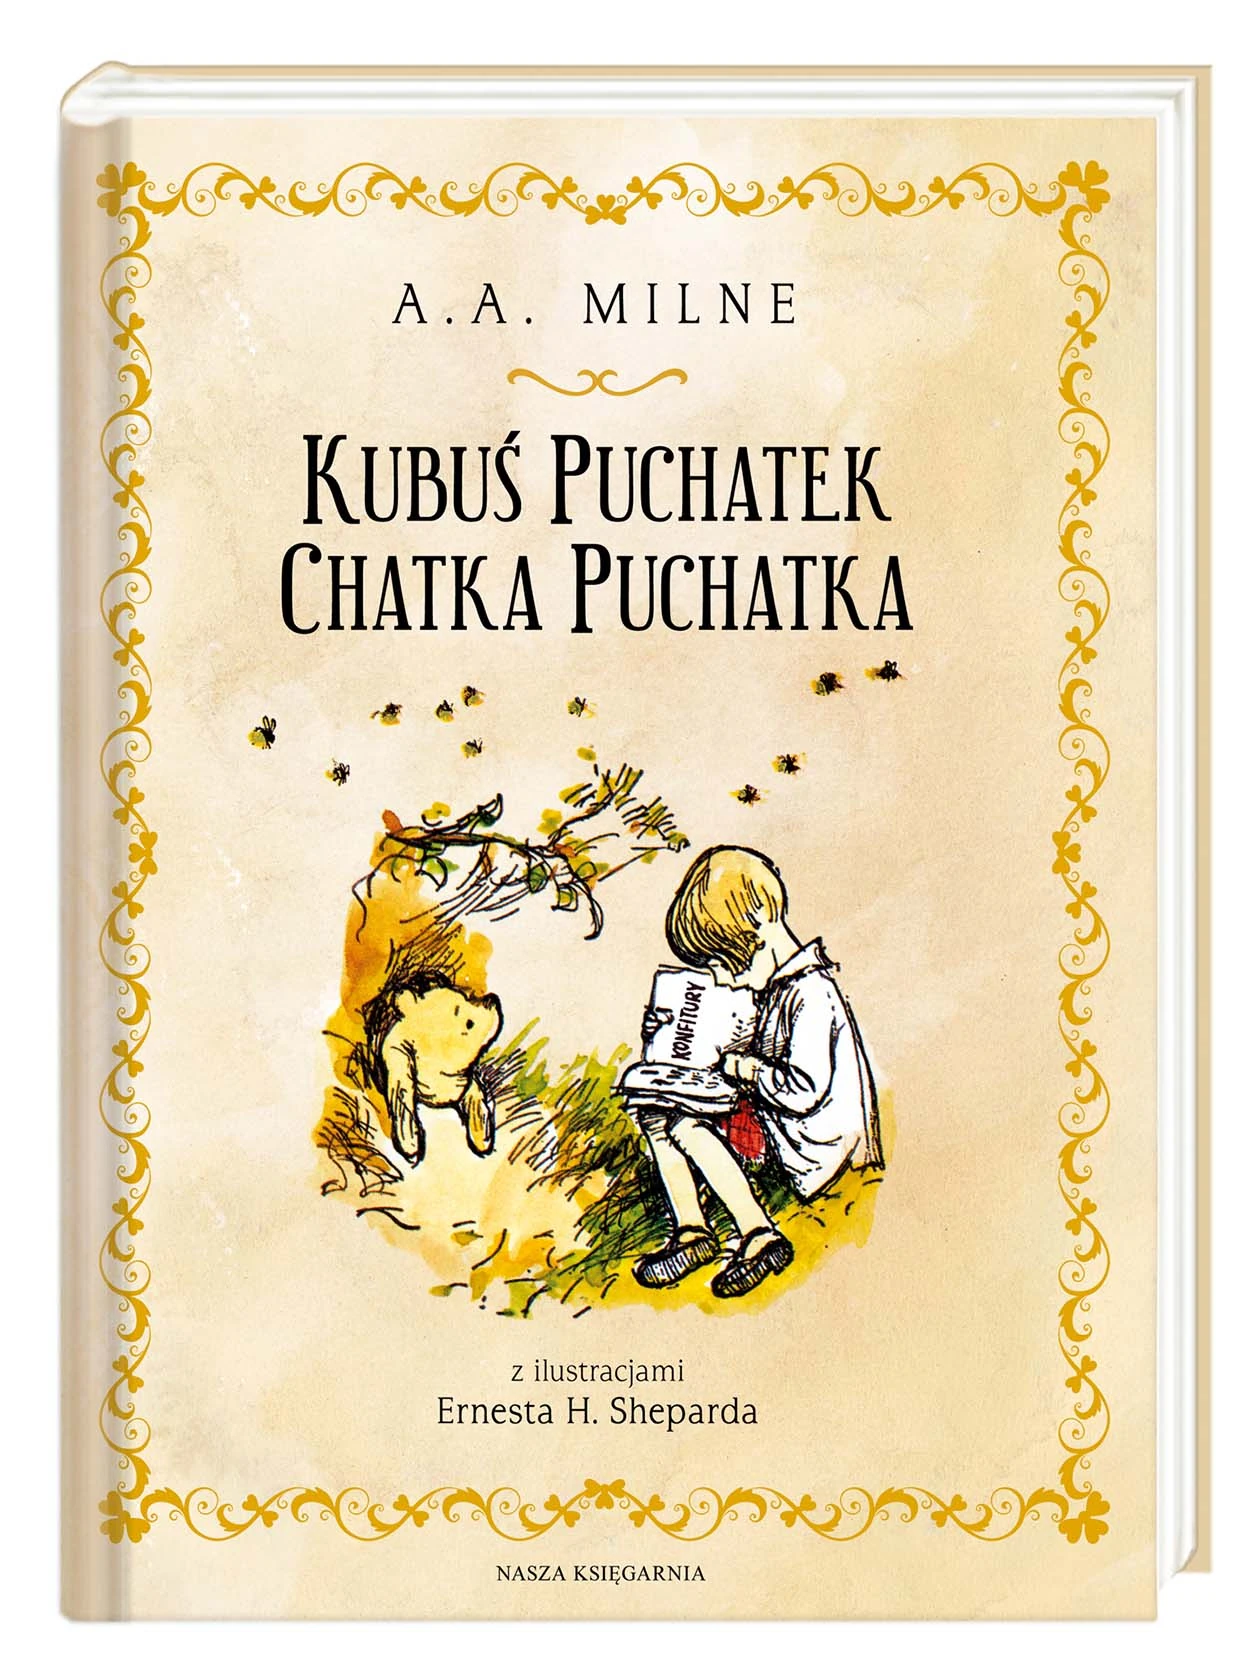 chatka-puchatka-kubus-puchatek-wydawnictwo-nasza-ksiegarnia